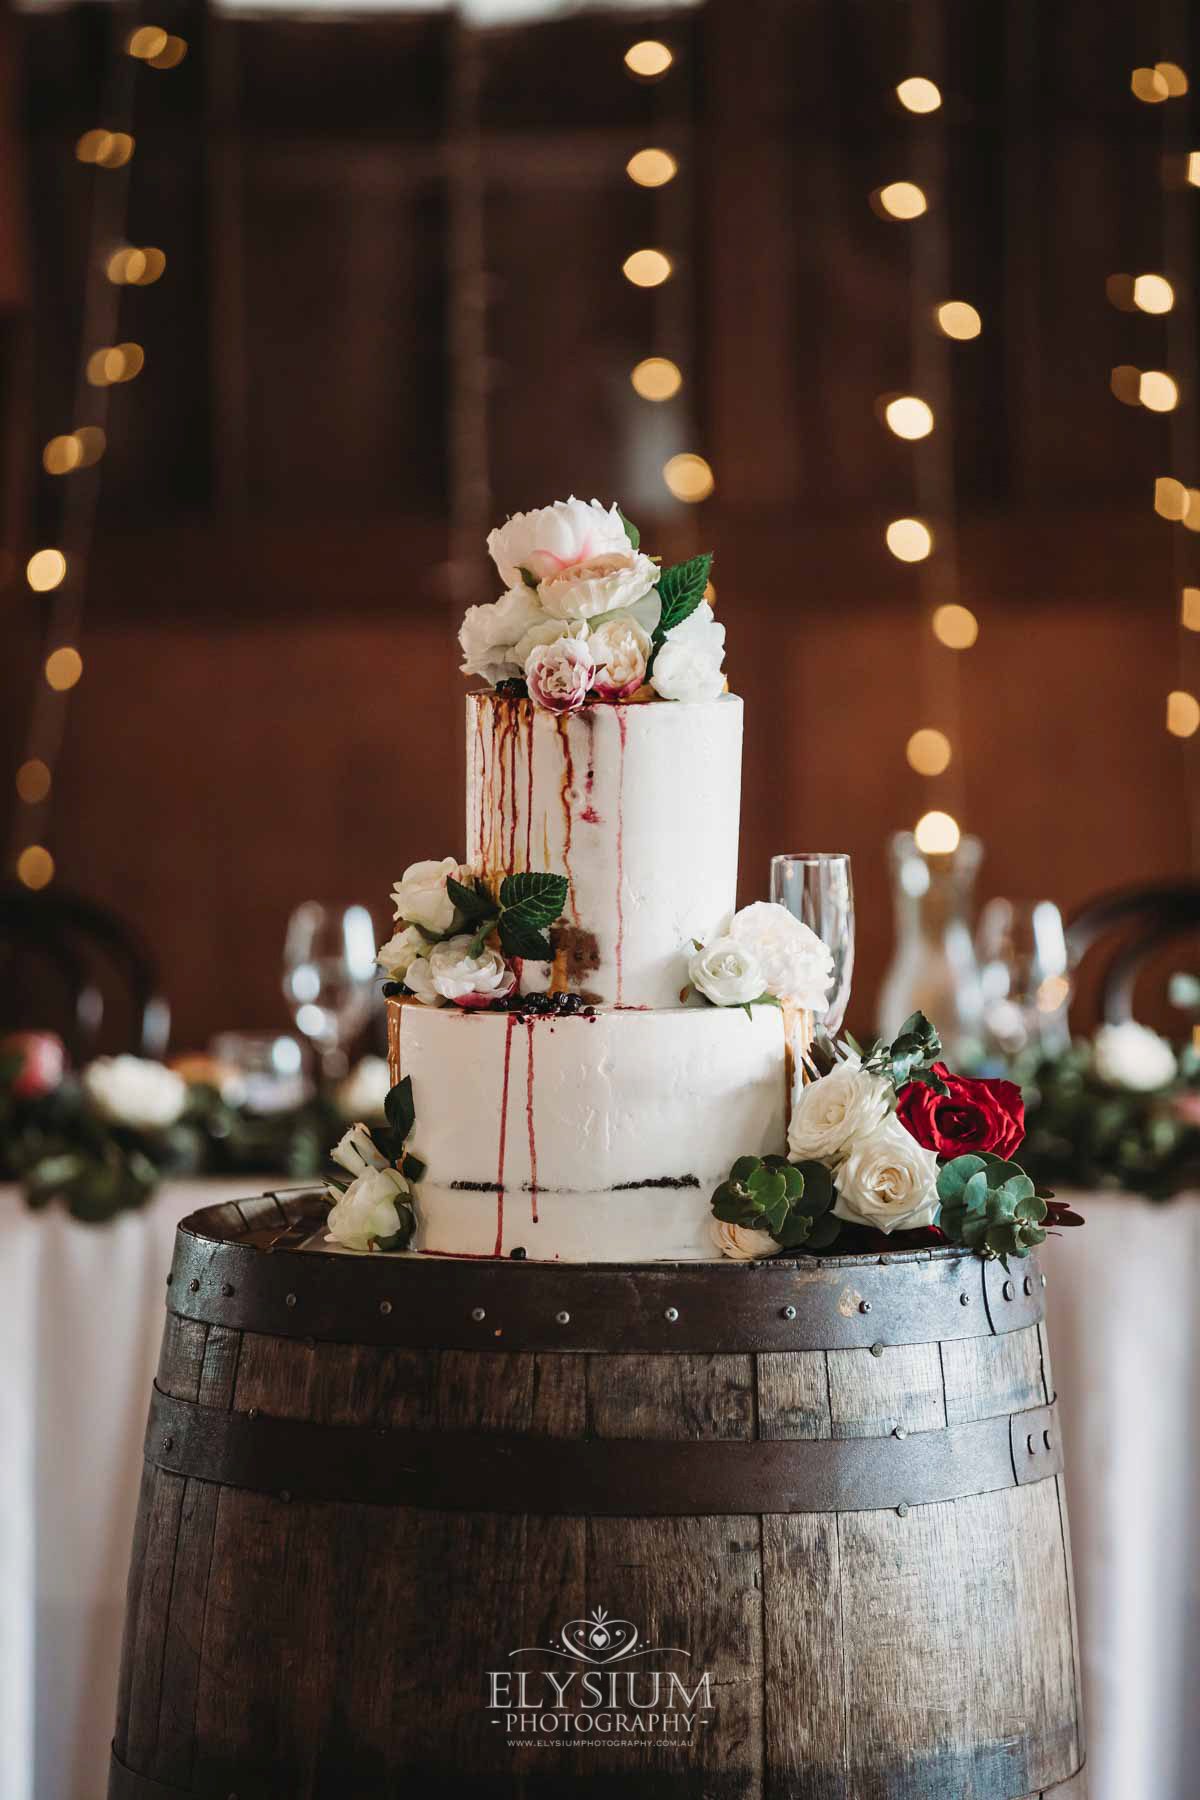 Gledswood Wedding - wedding cake sits on a wine barrel in the reception venue